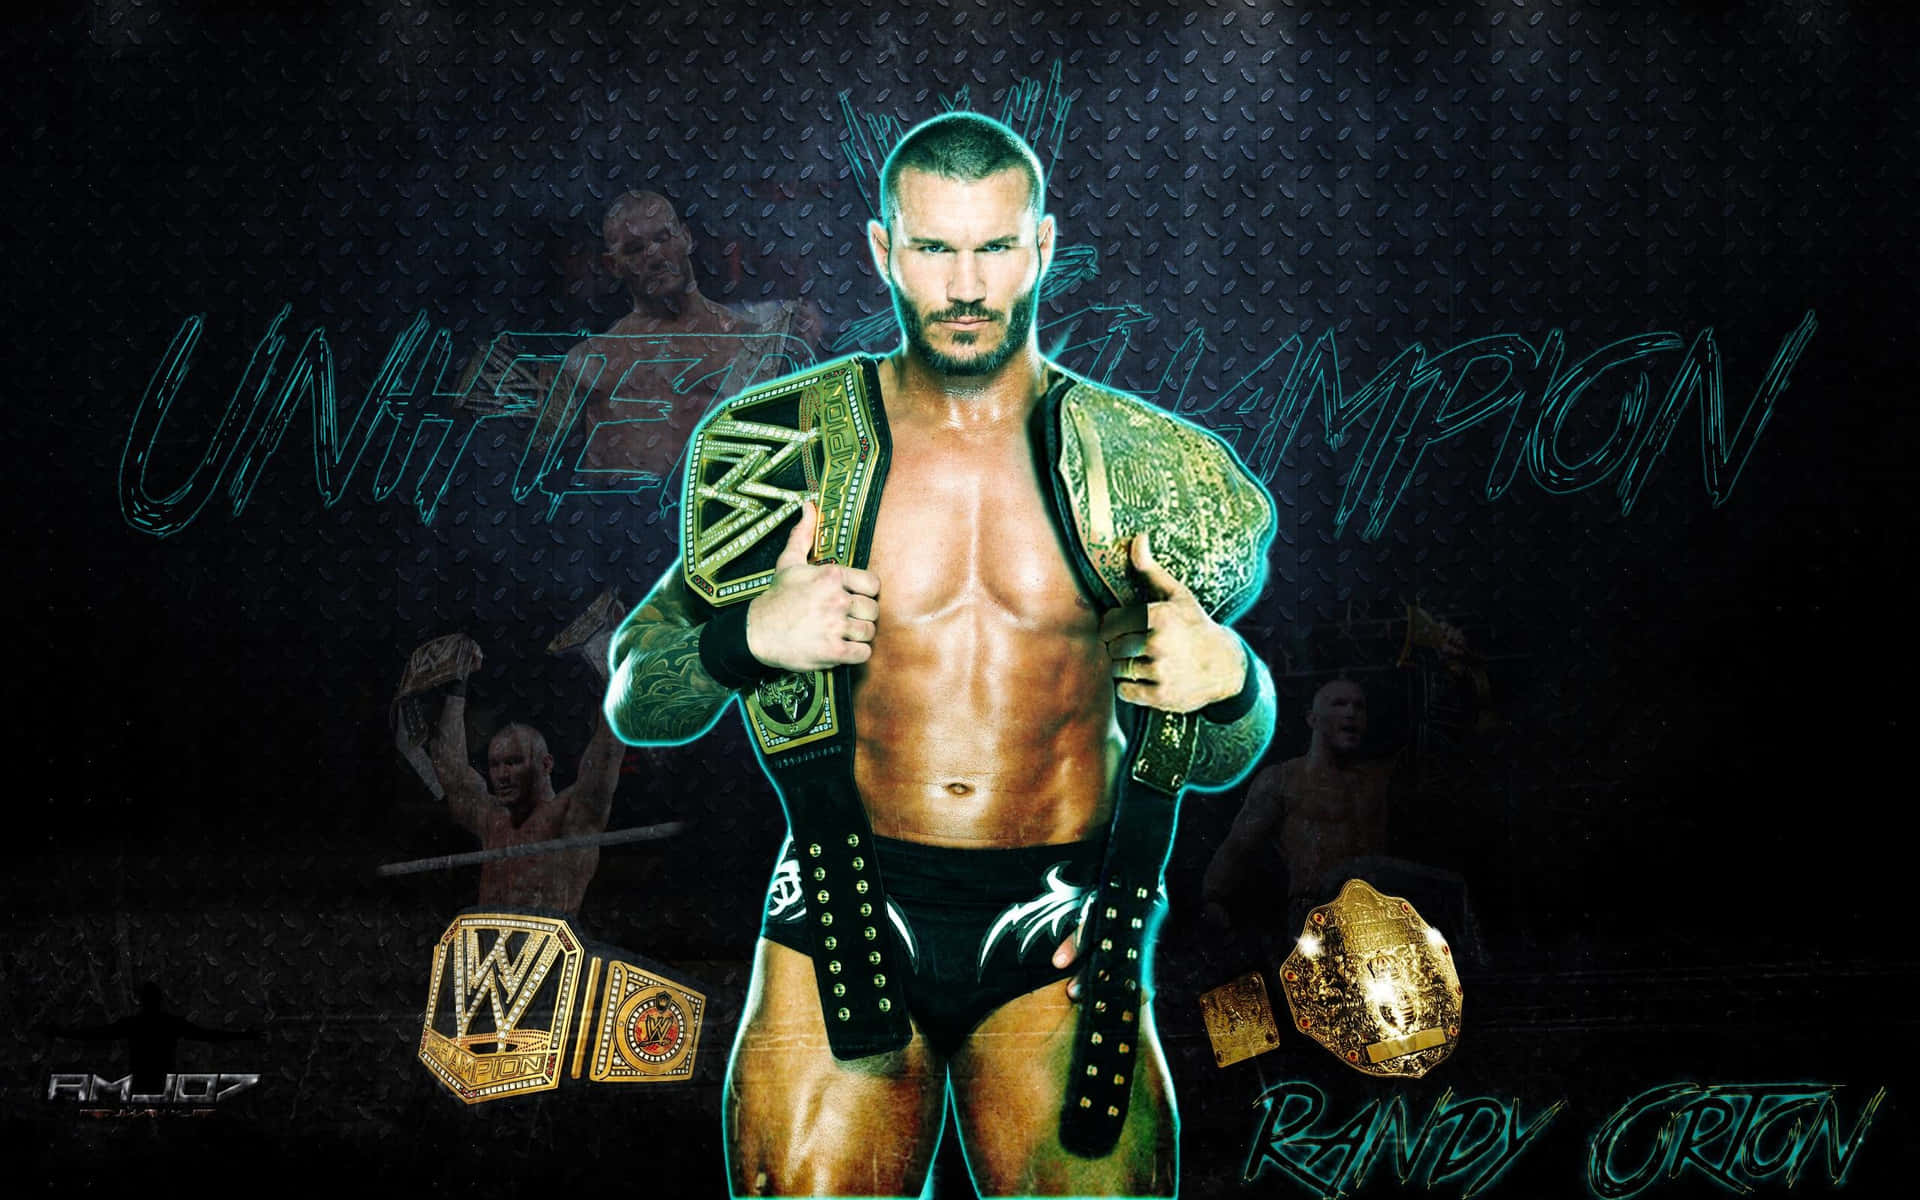 Randy Orton, “Legendedræberen